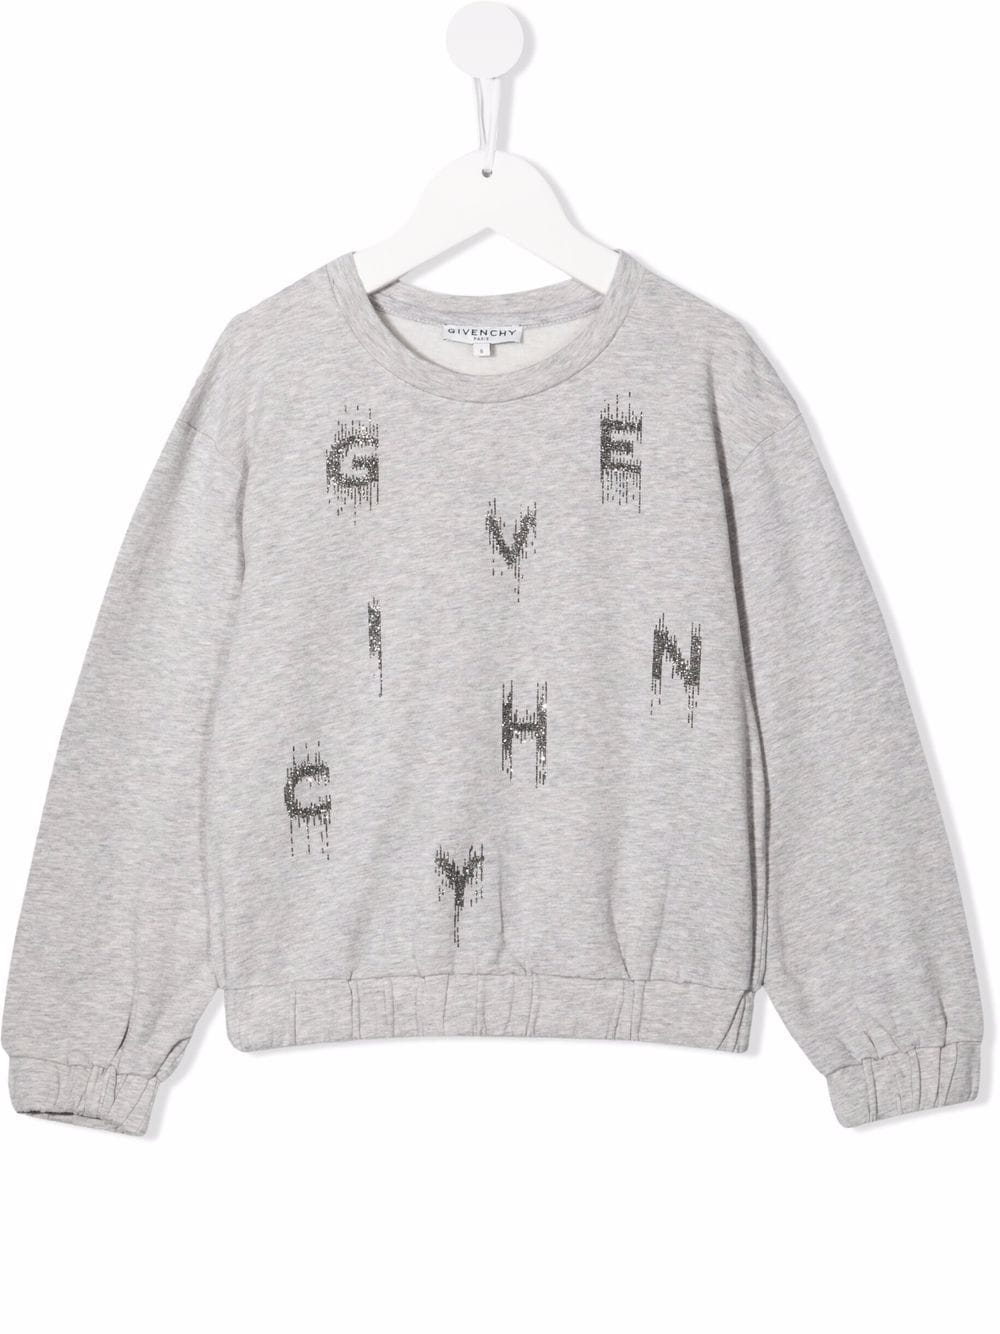 Givenchy Grey Kids Sweatshirt With Glitter Logo